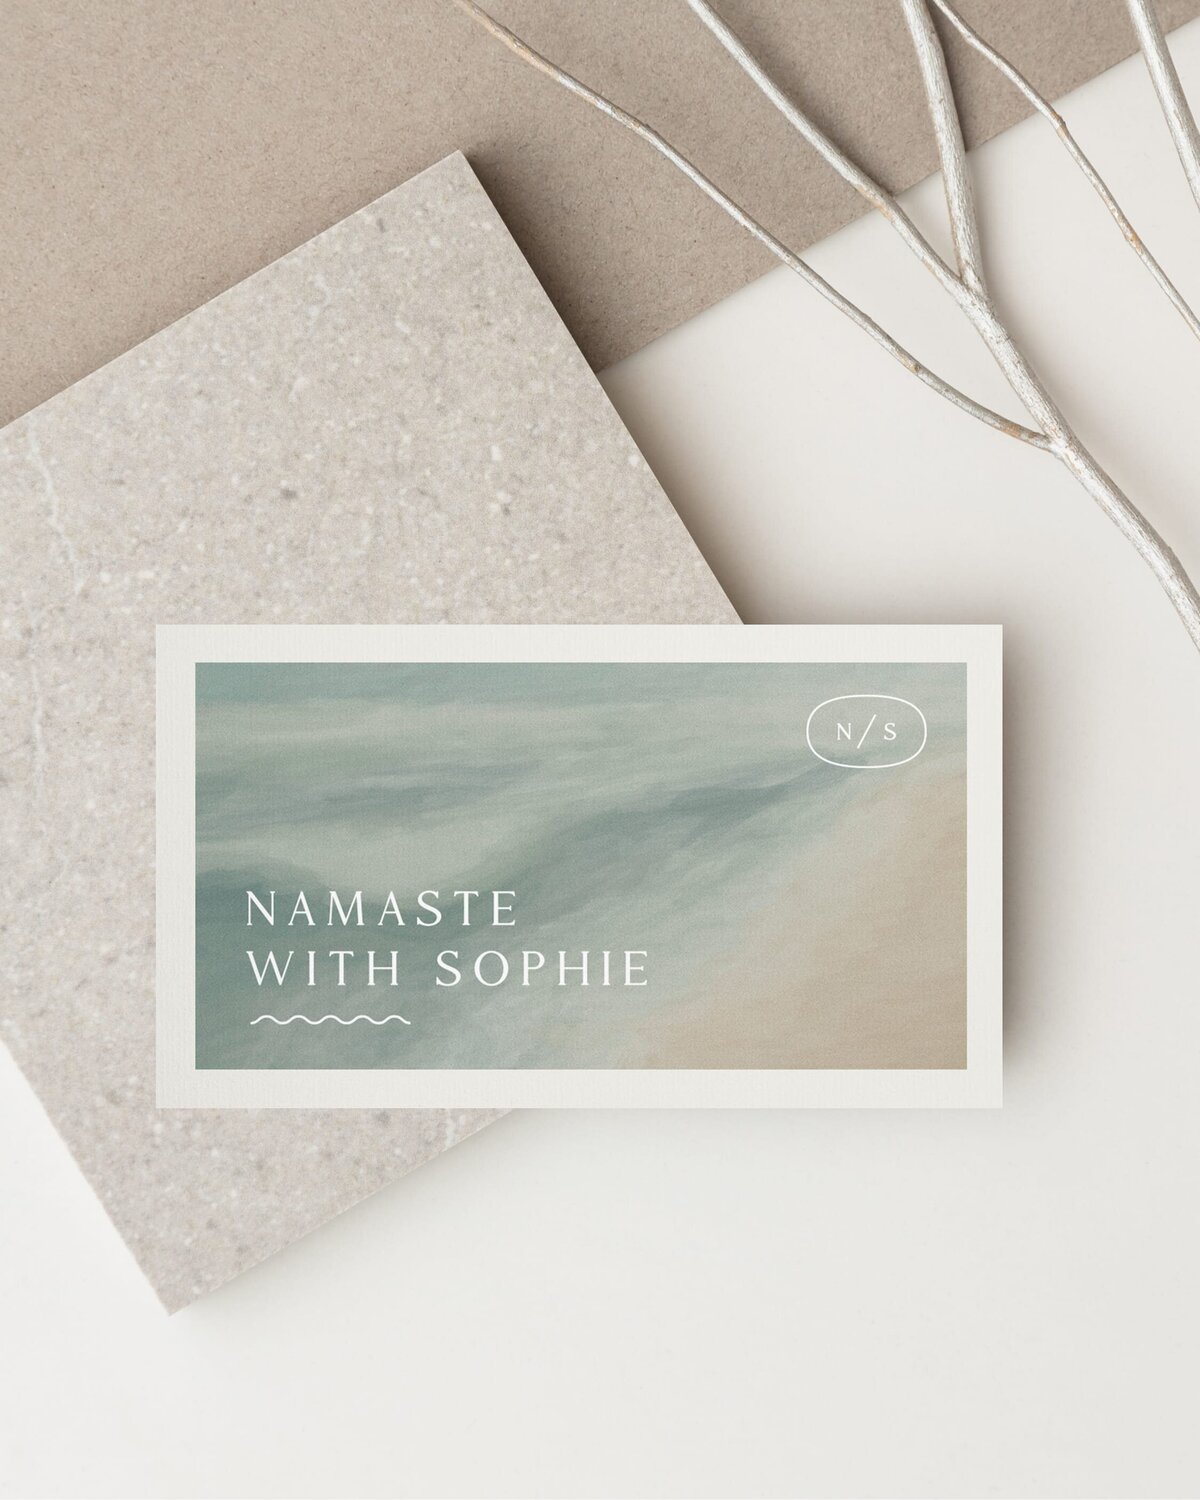 NamasteWithSophie_LaunchGraphics_Instagram